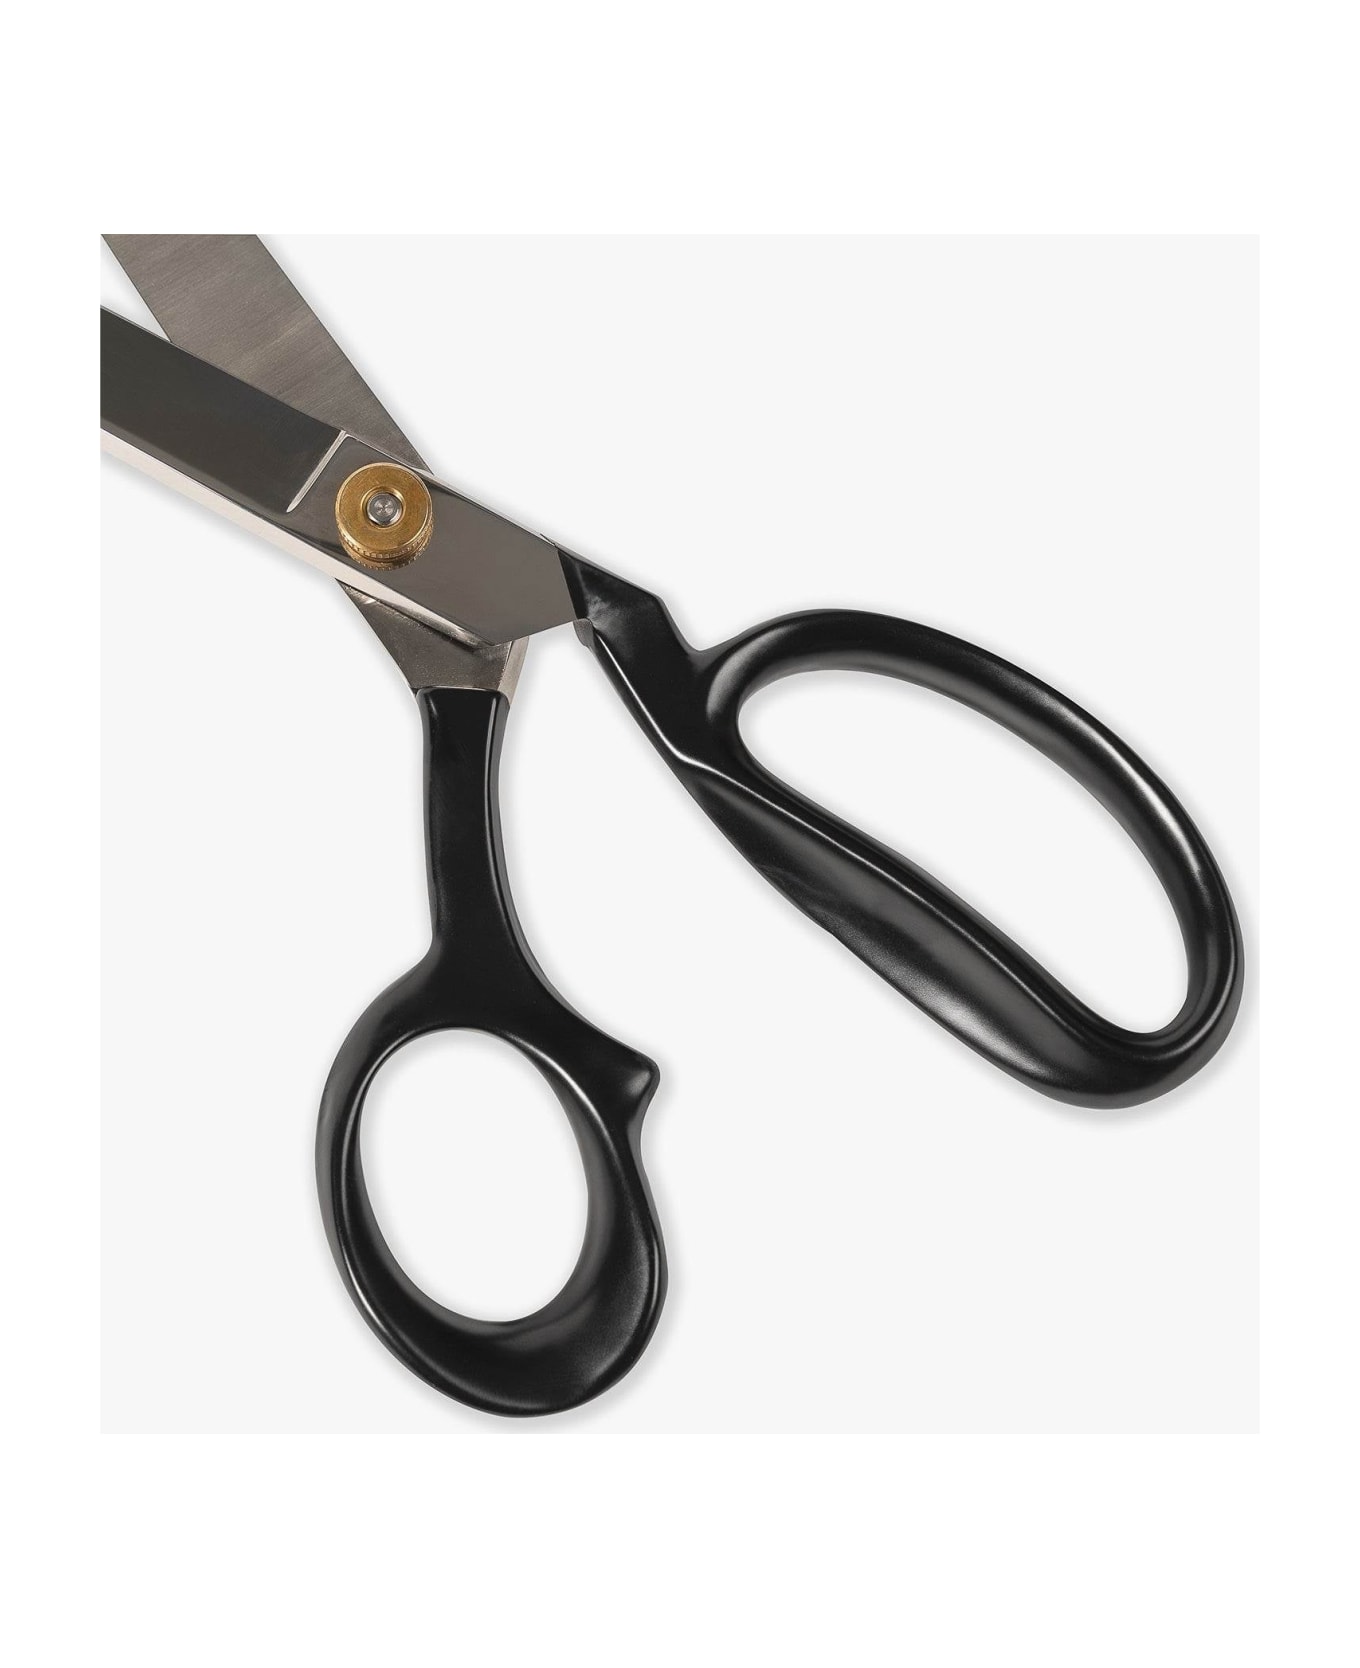 Larusmiani Tailoring Scissors  - Neutral